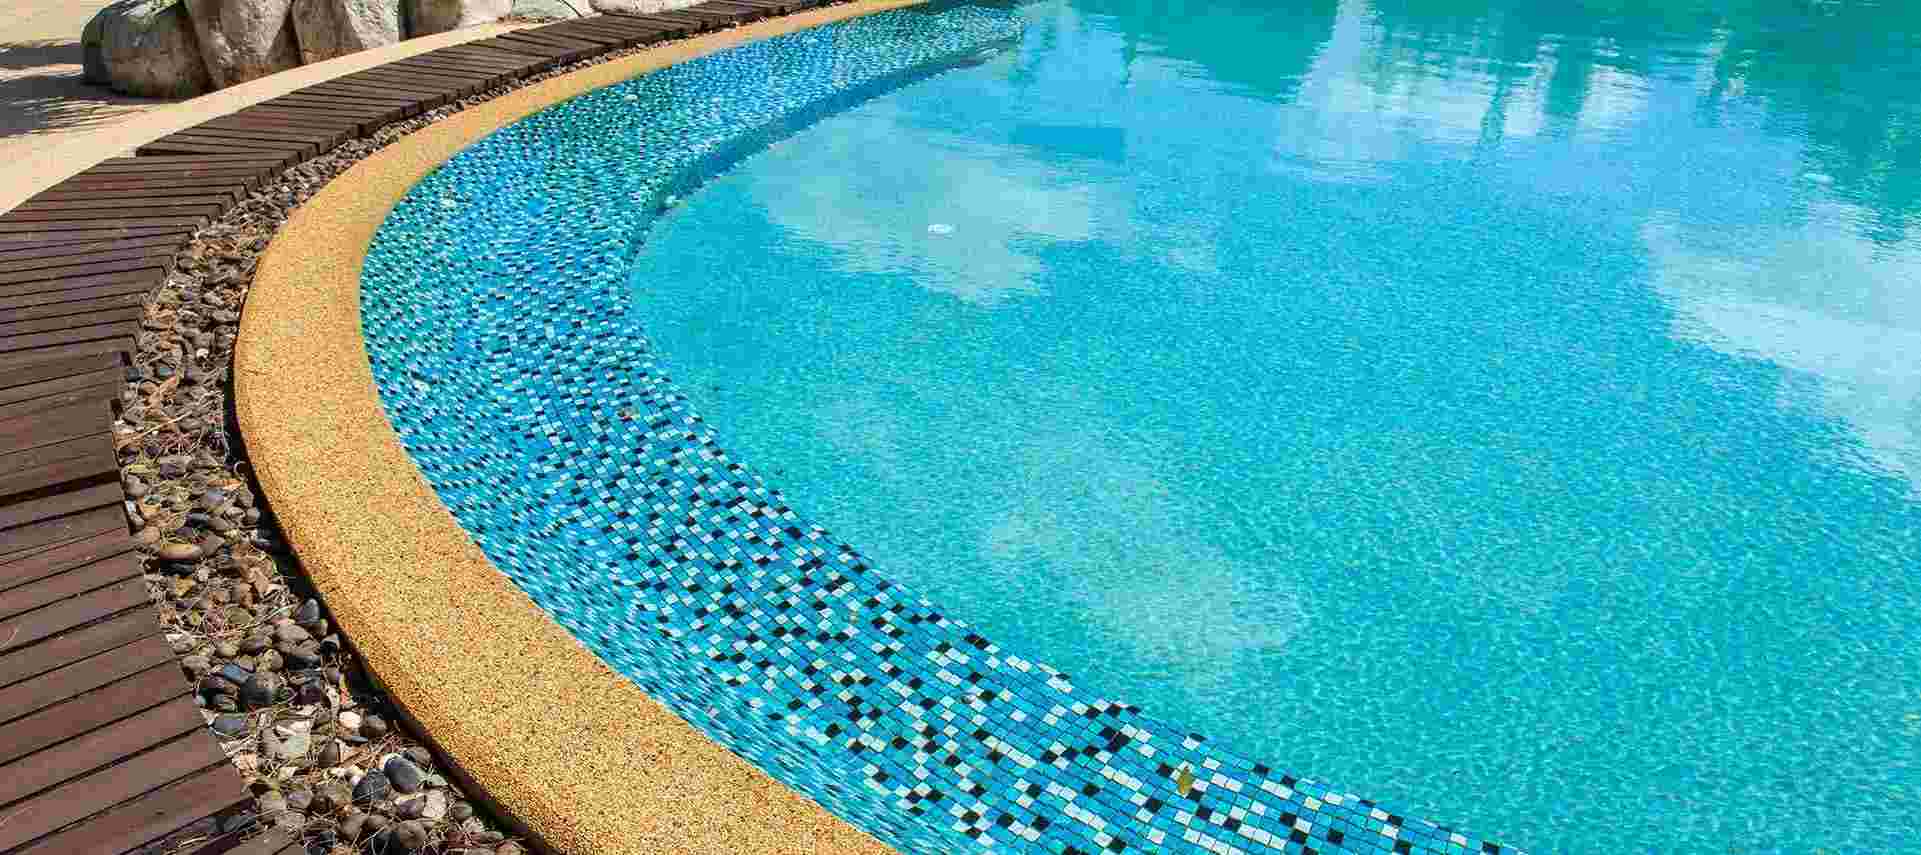  swimming pool glass beads